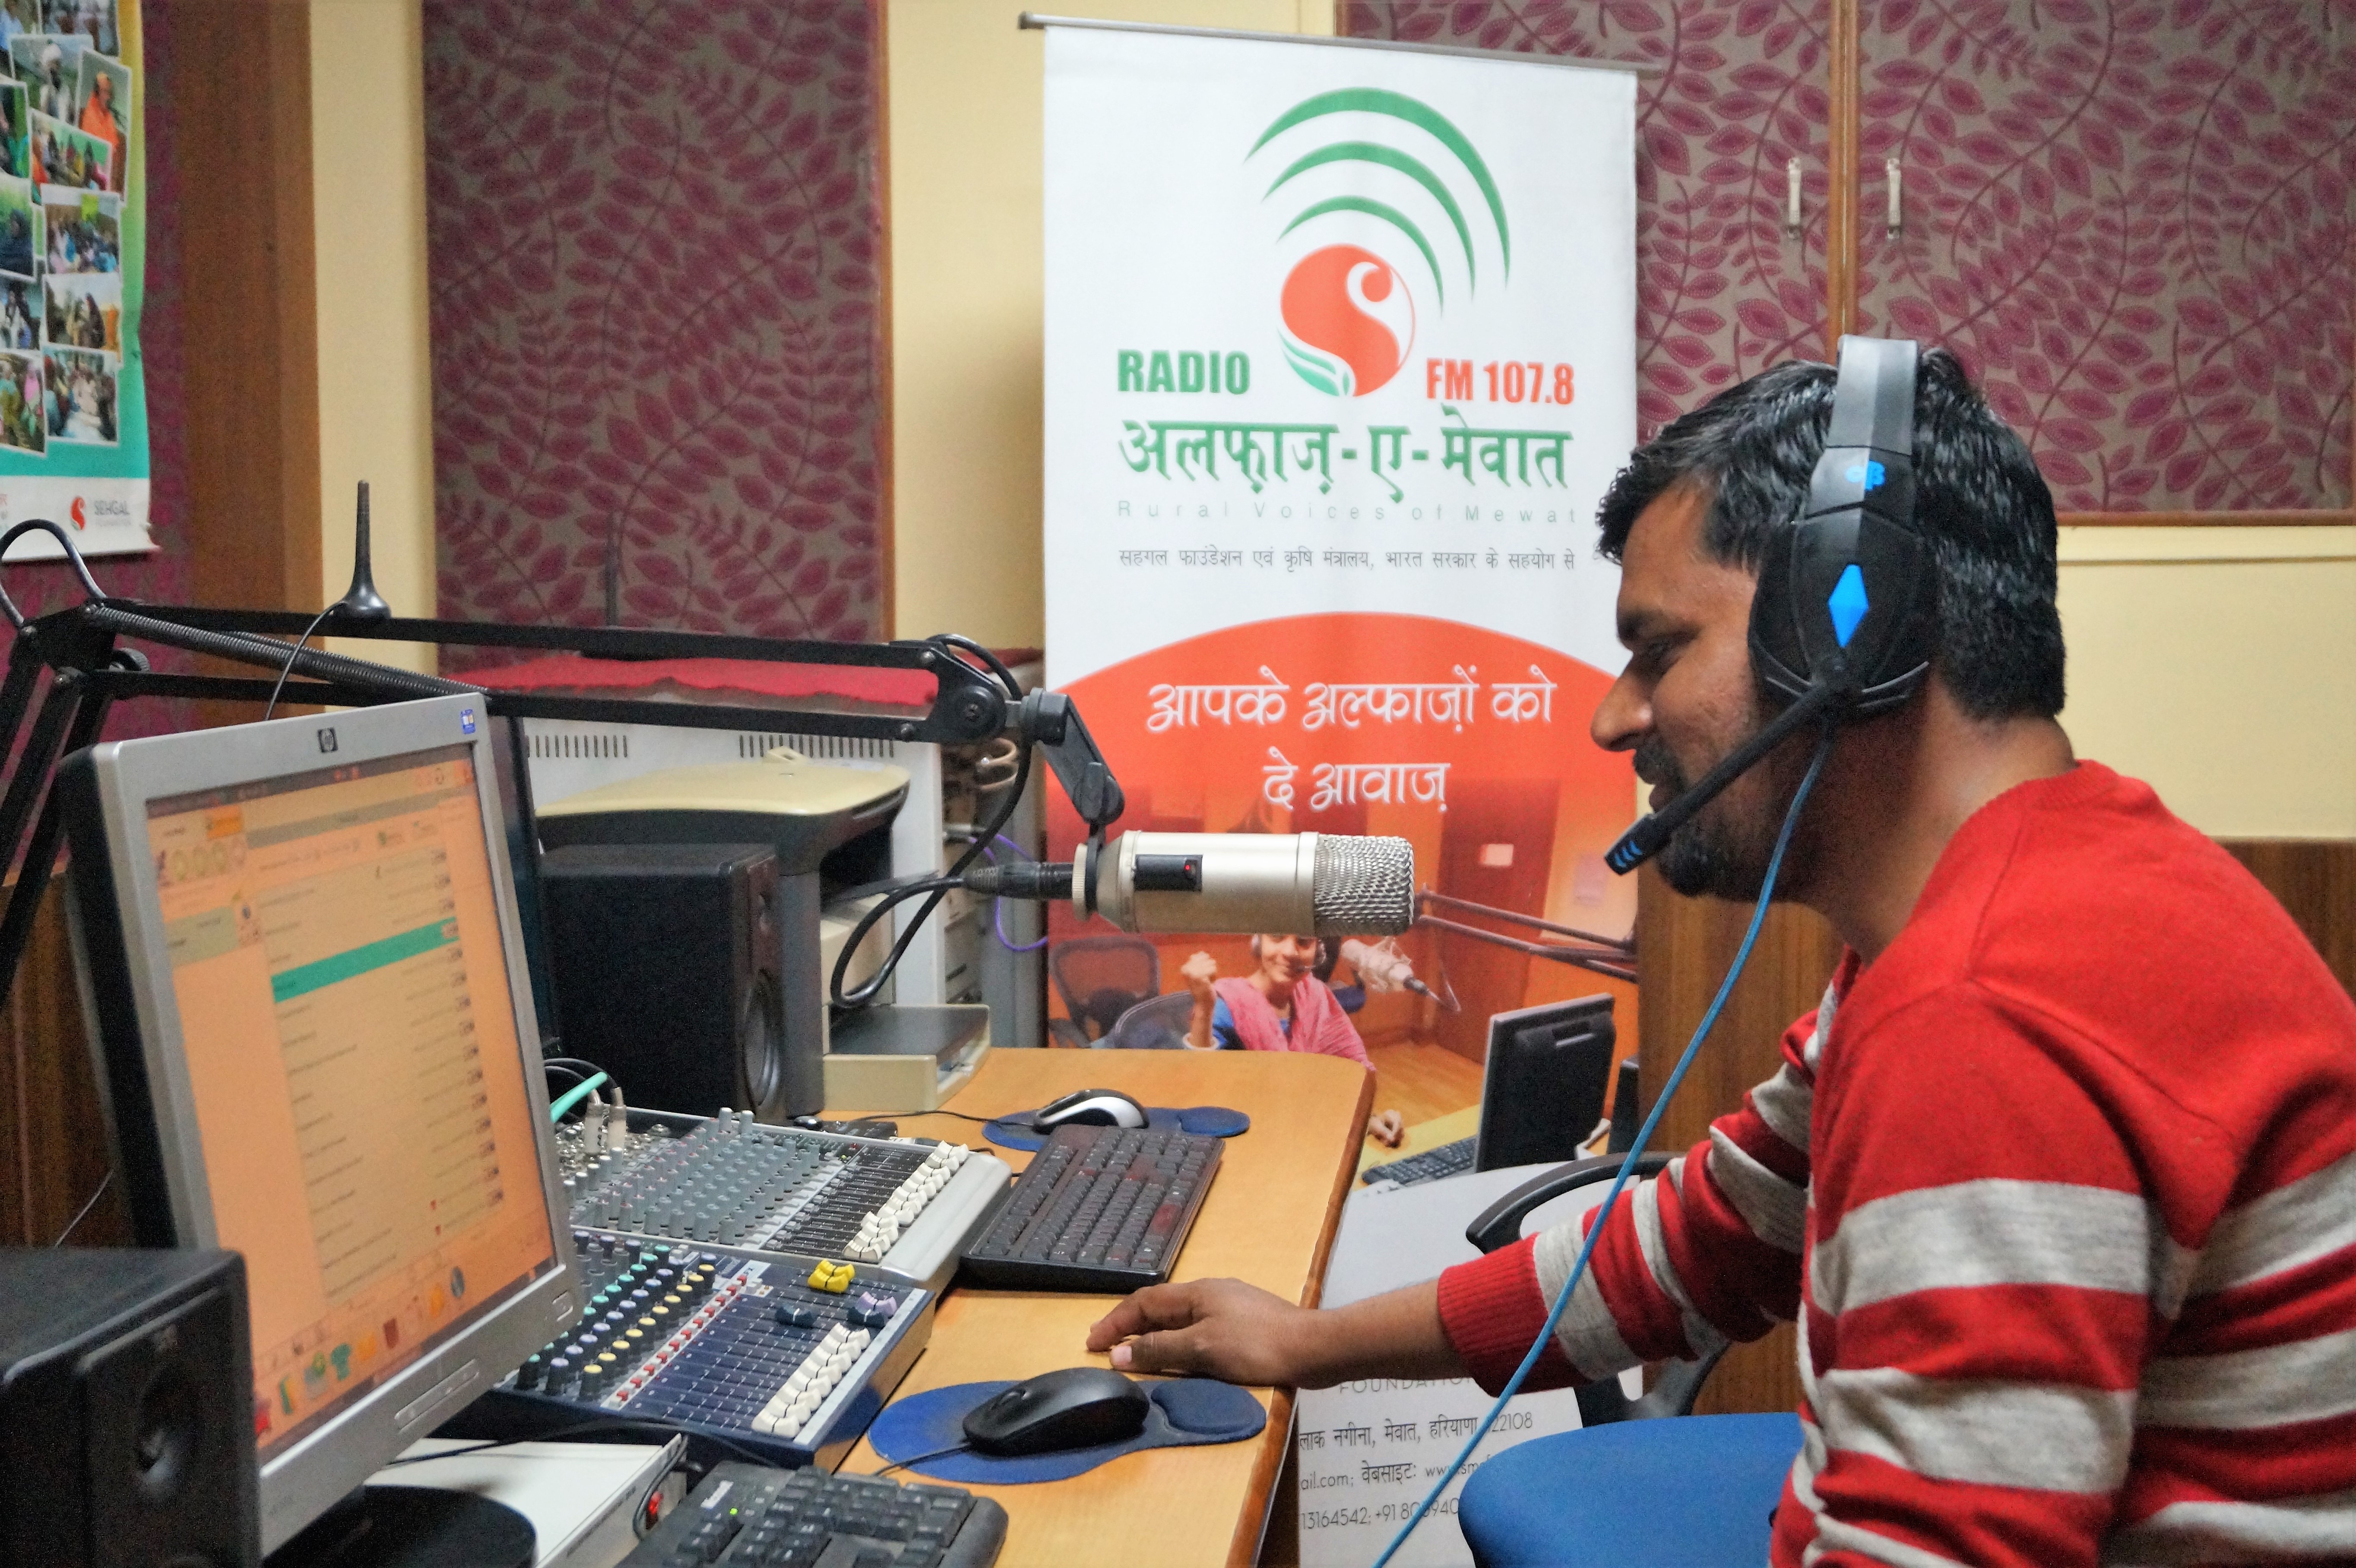 Community radio Alfaz-e-Mewat launches the radio series 'Mitti Ki Khushbu': A series on soil health management